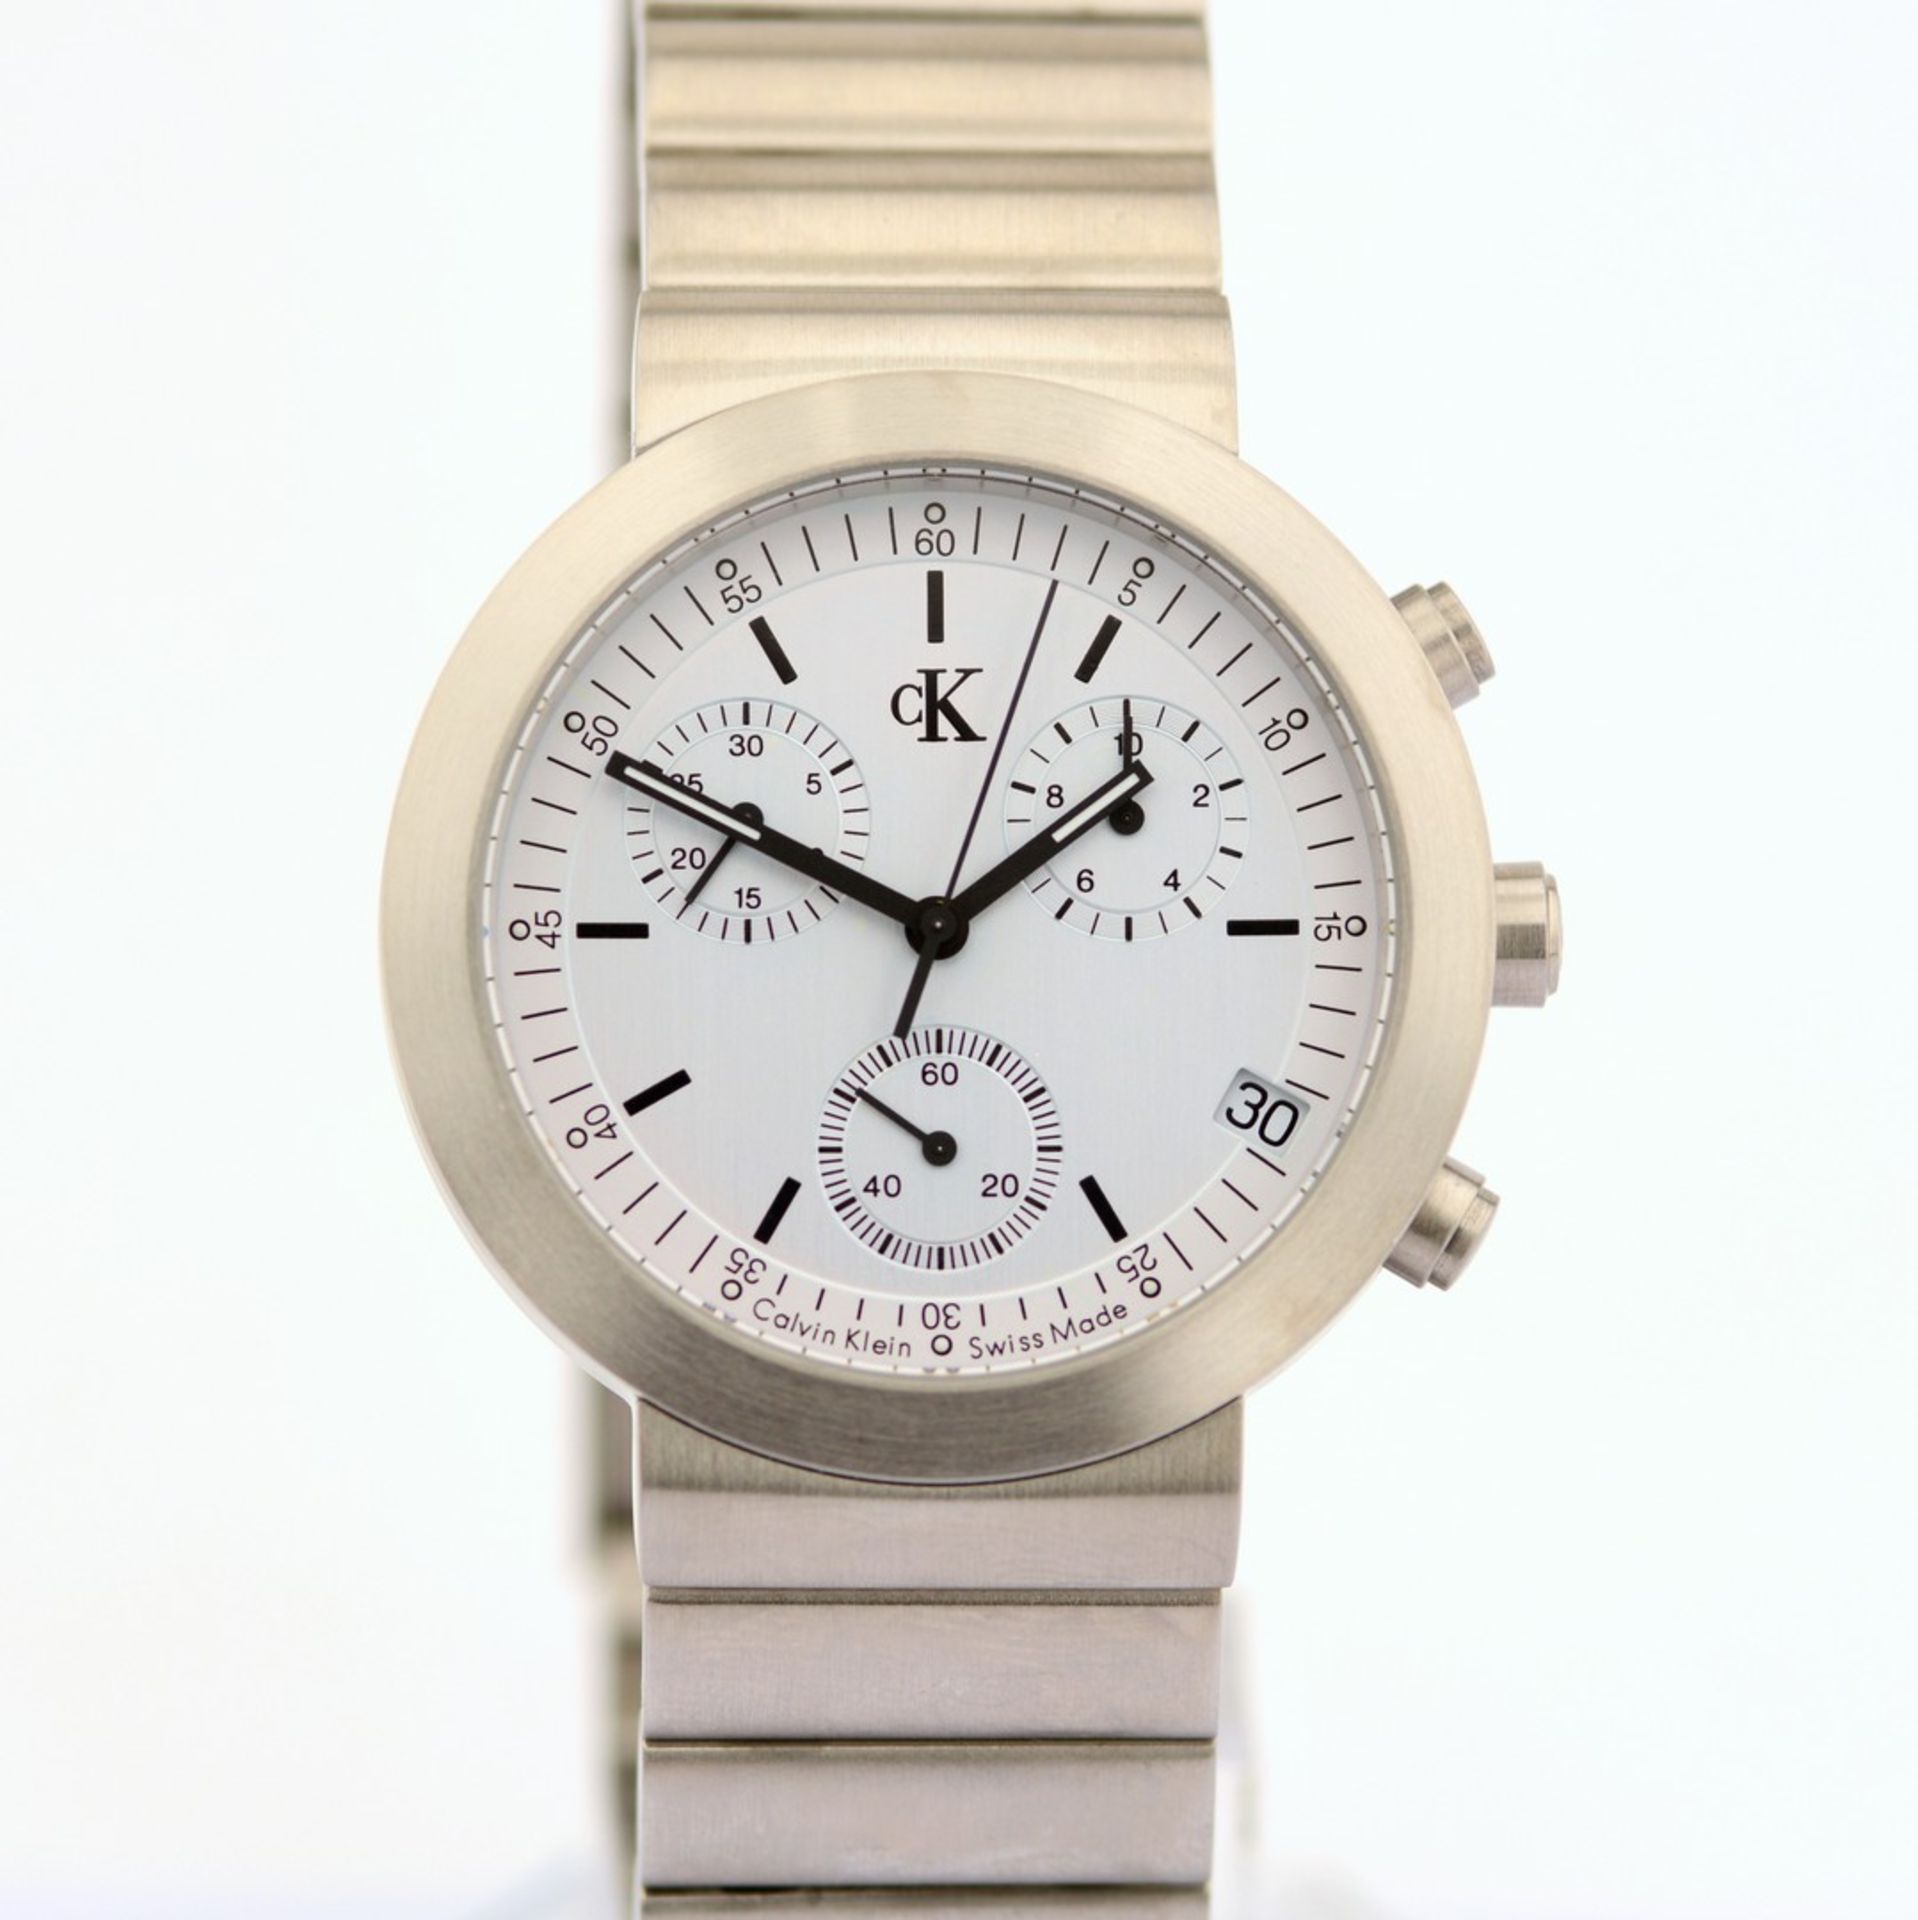 Calvin Klein / Chronograph - Gentlemen's Steel Wristwatch - Image 2 of 8